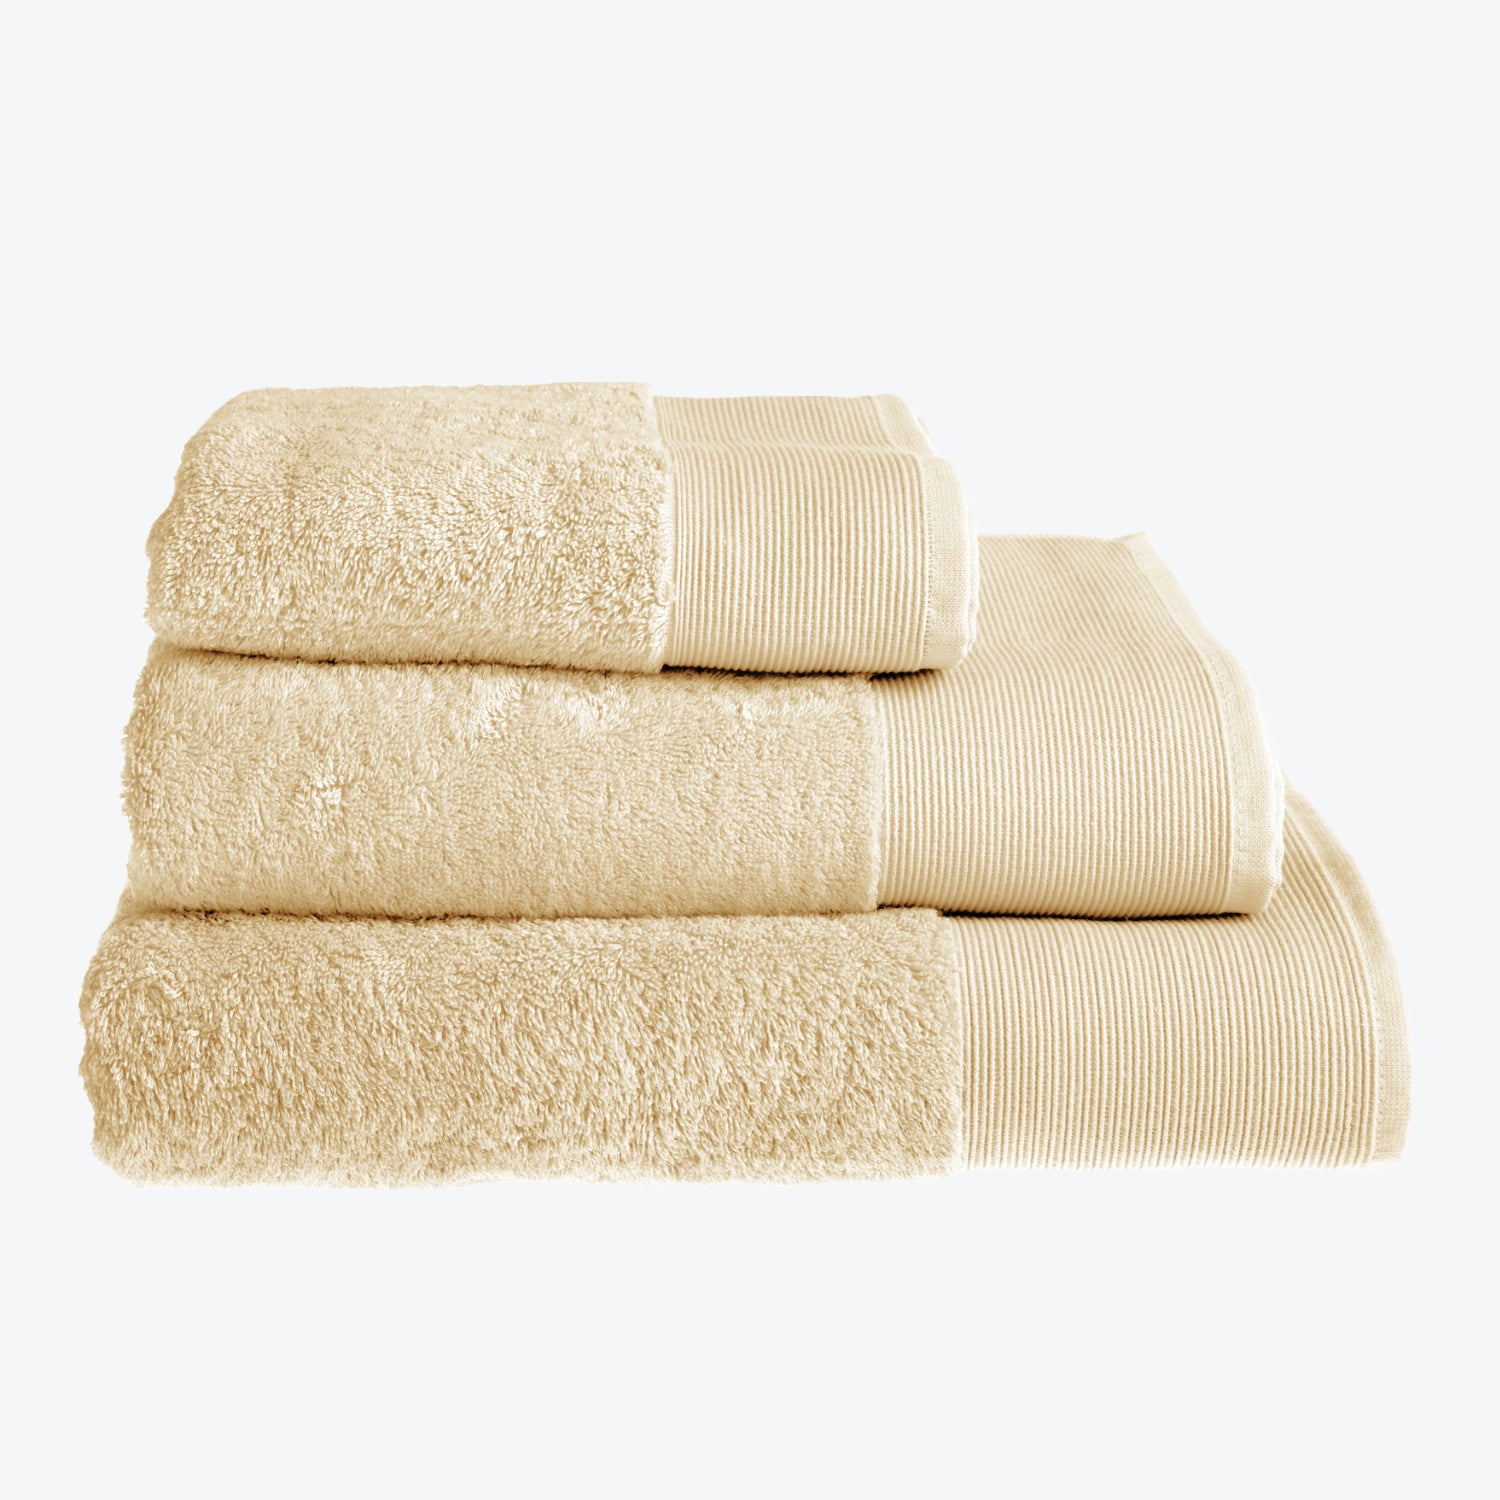 Stone bamboo towel set